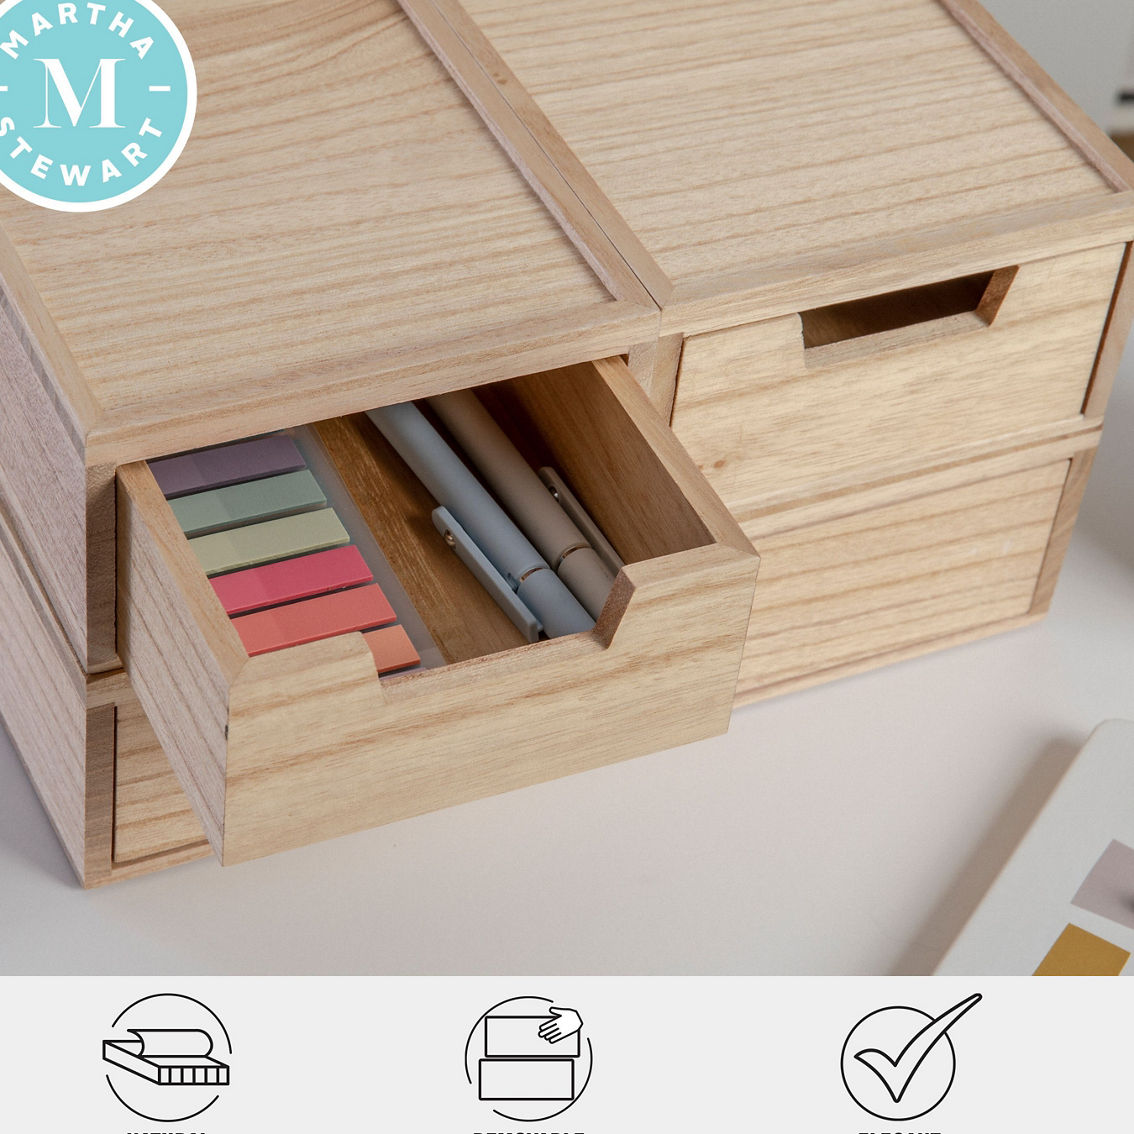 Martha Stewart 3PK Wooden Storage Box with Drawers - Image 3 of 5